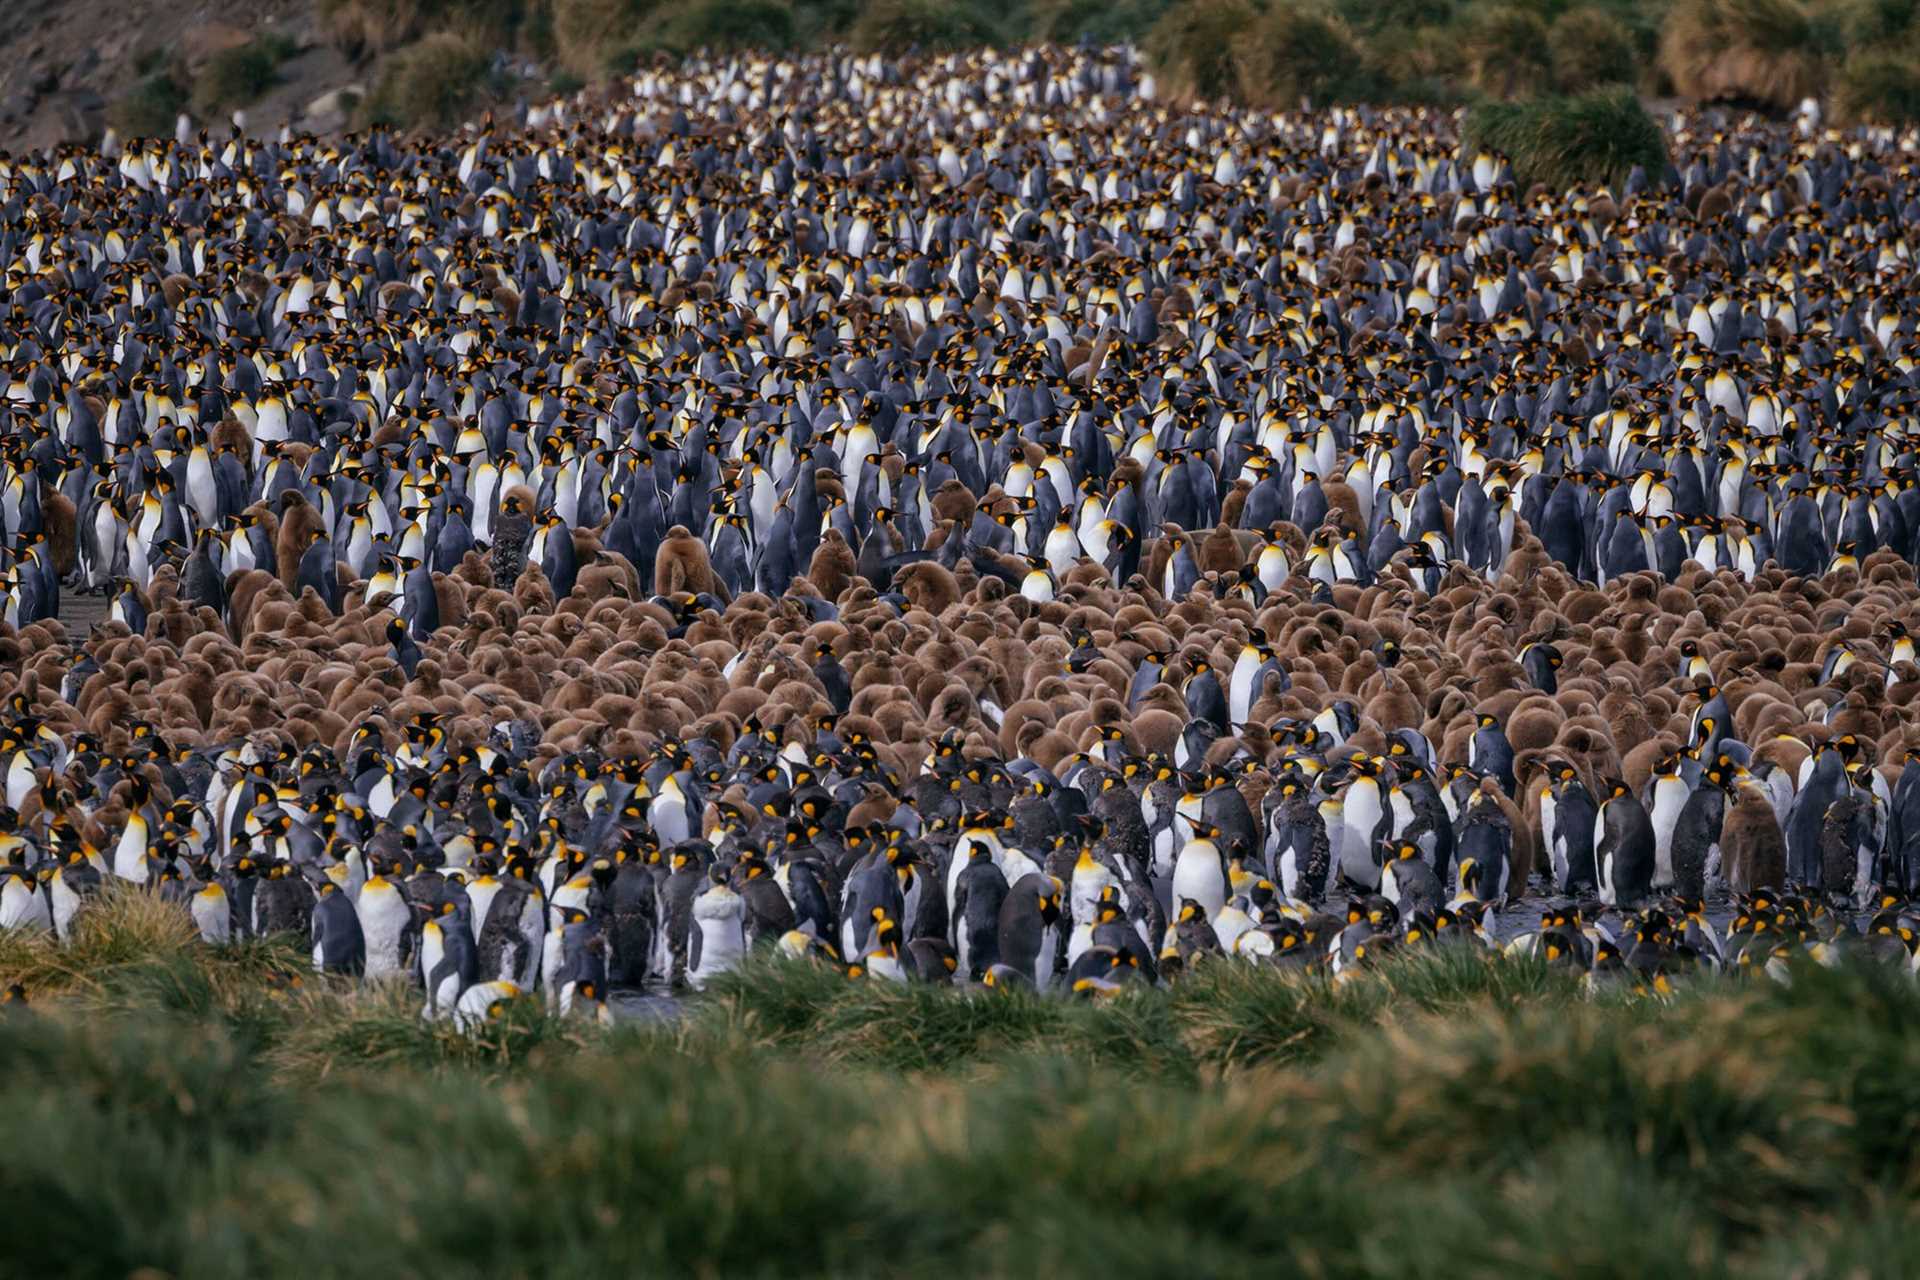 thousands of penguins